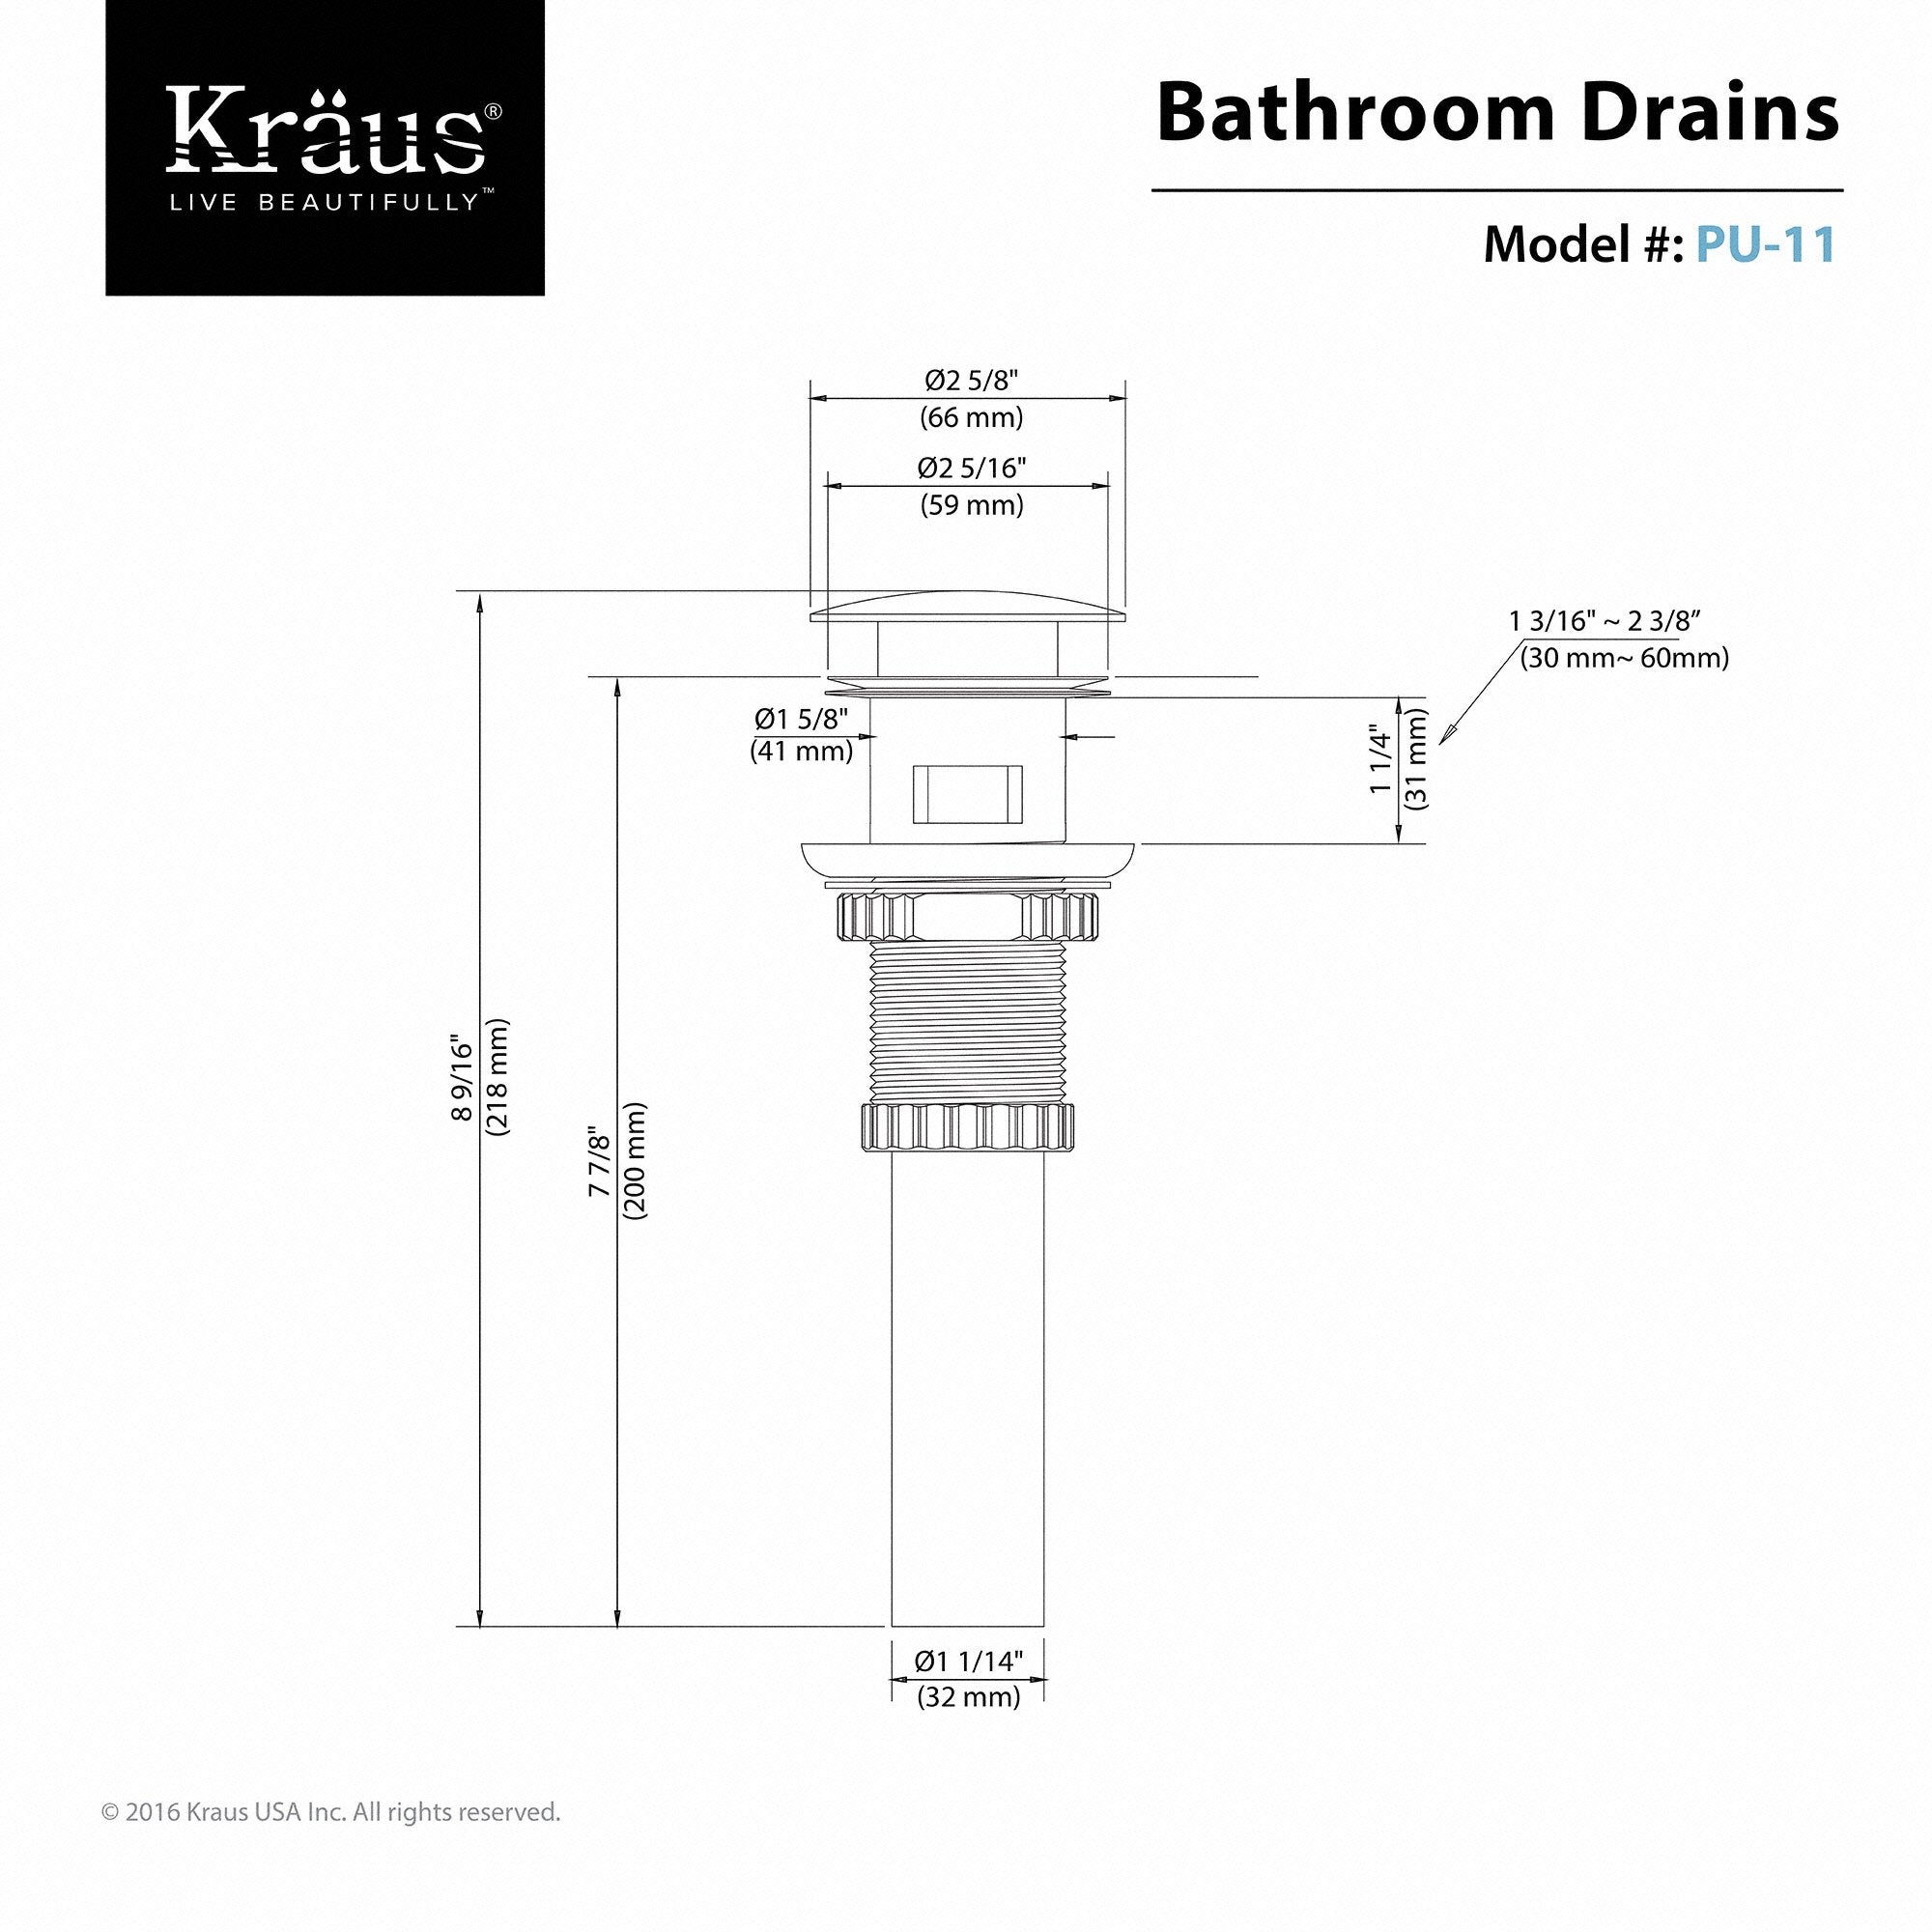 KRAUS Pop-Up Drain for Bathroom Sink-Bathroom Accessories-KRAUS